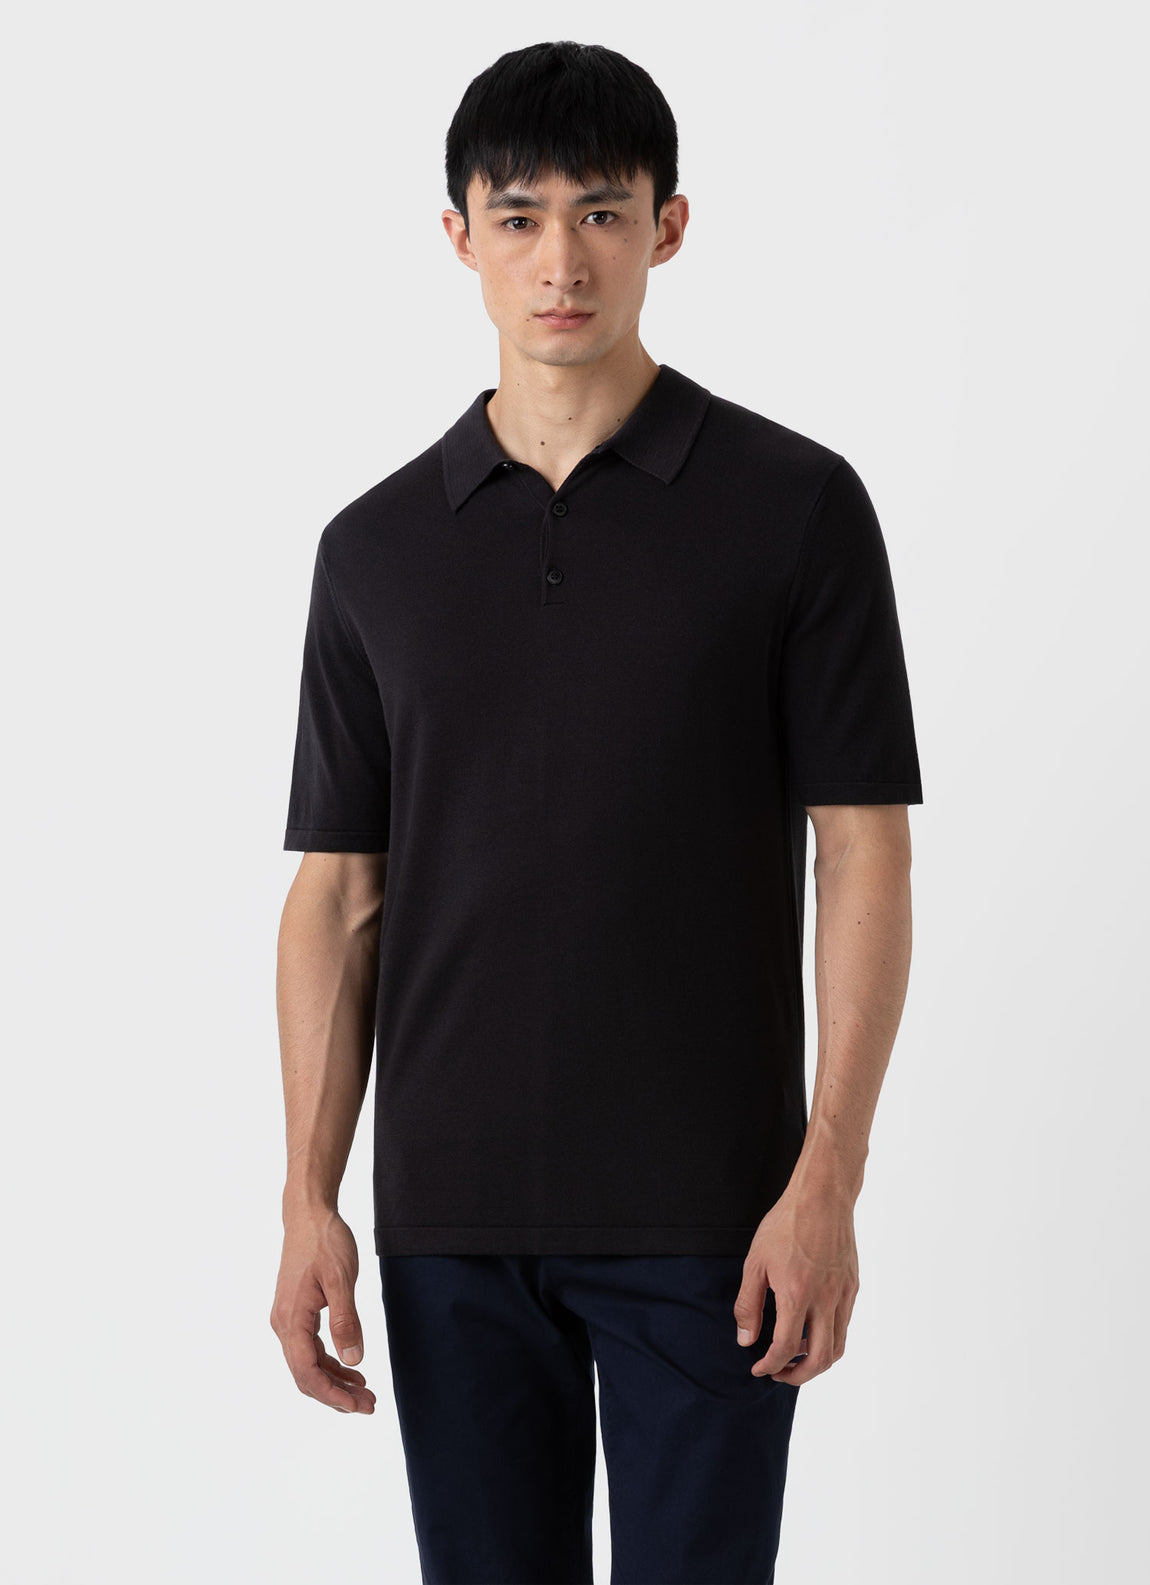 Men's Sea Island Cotton Polo Shirt in Black | Sunspel